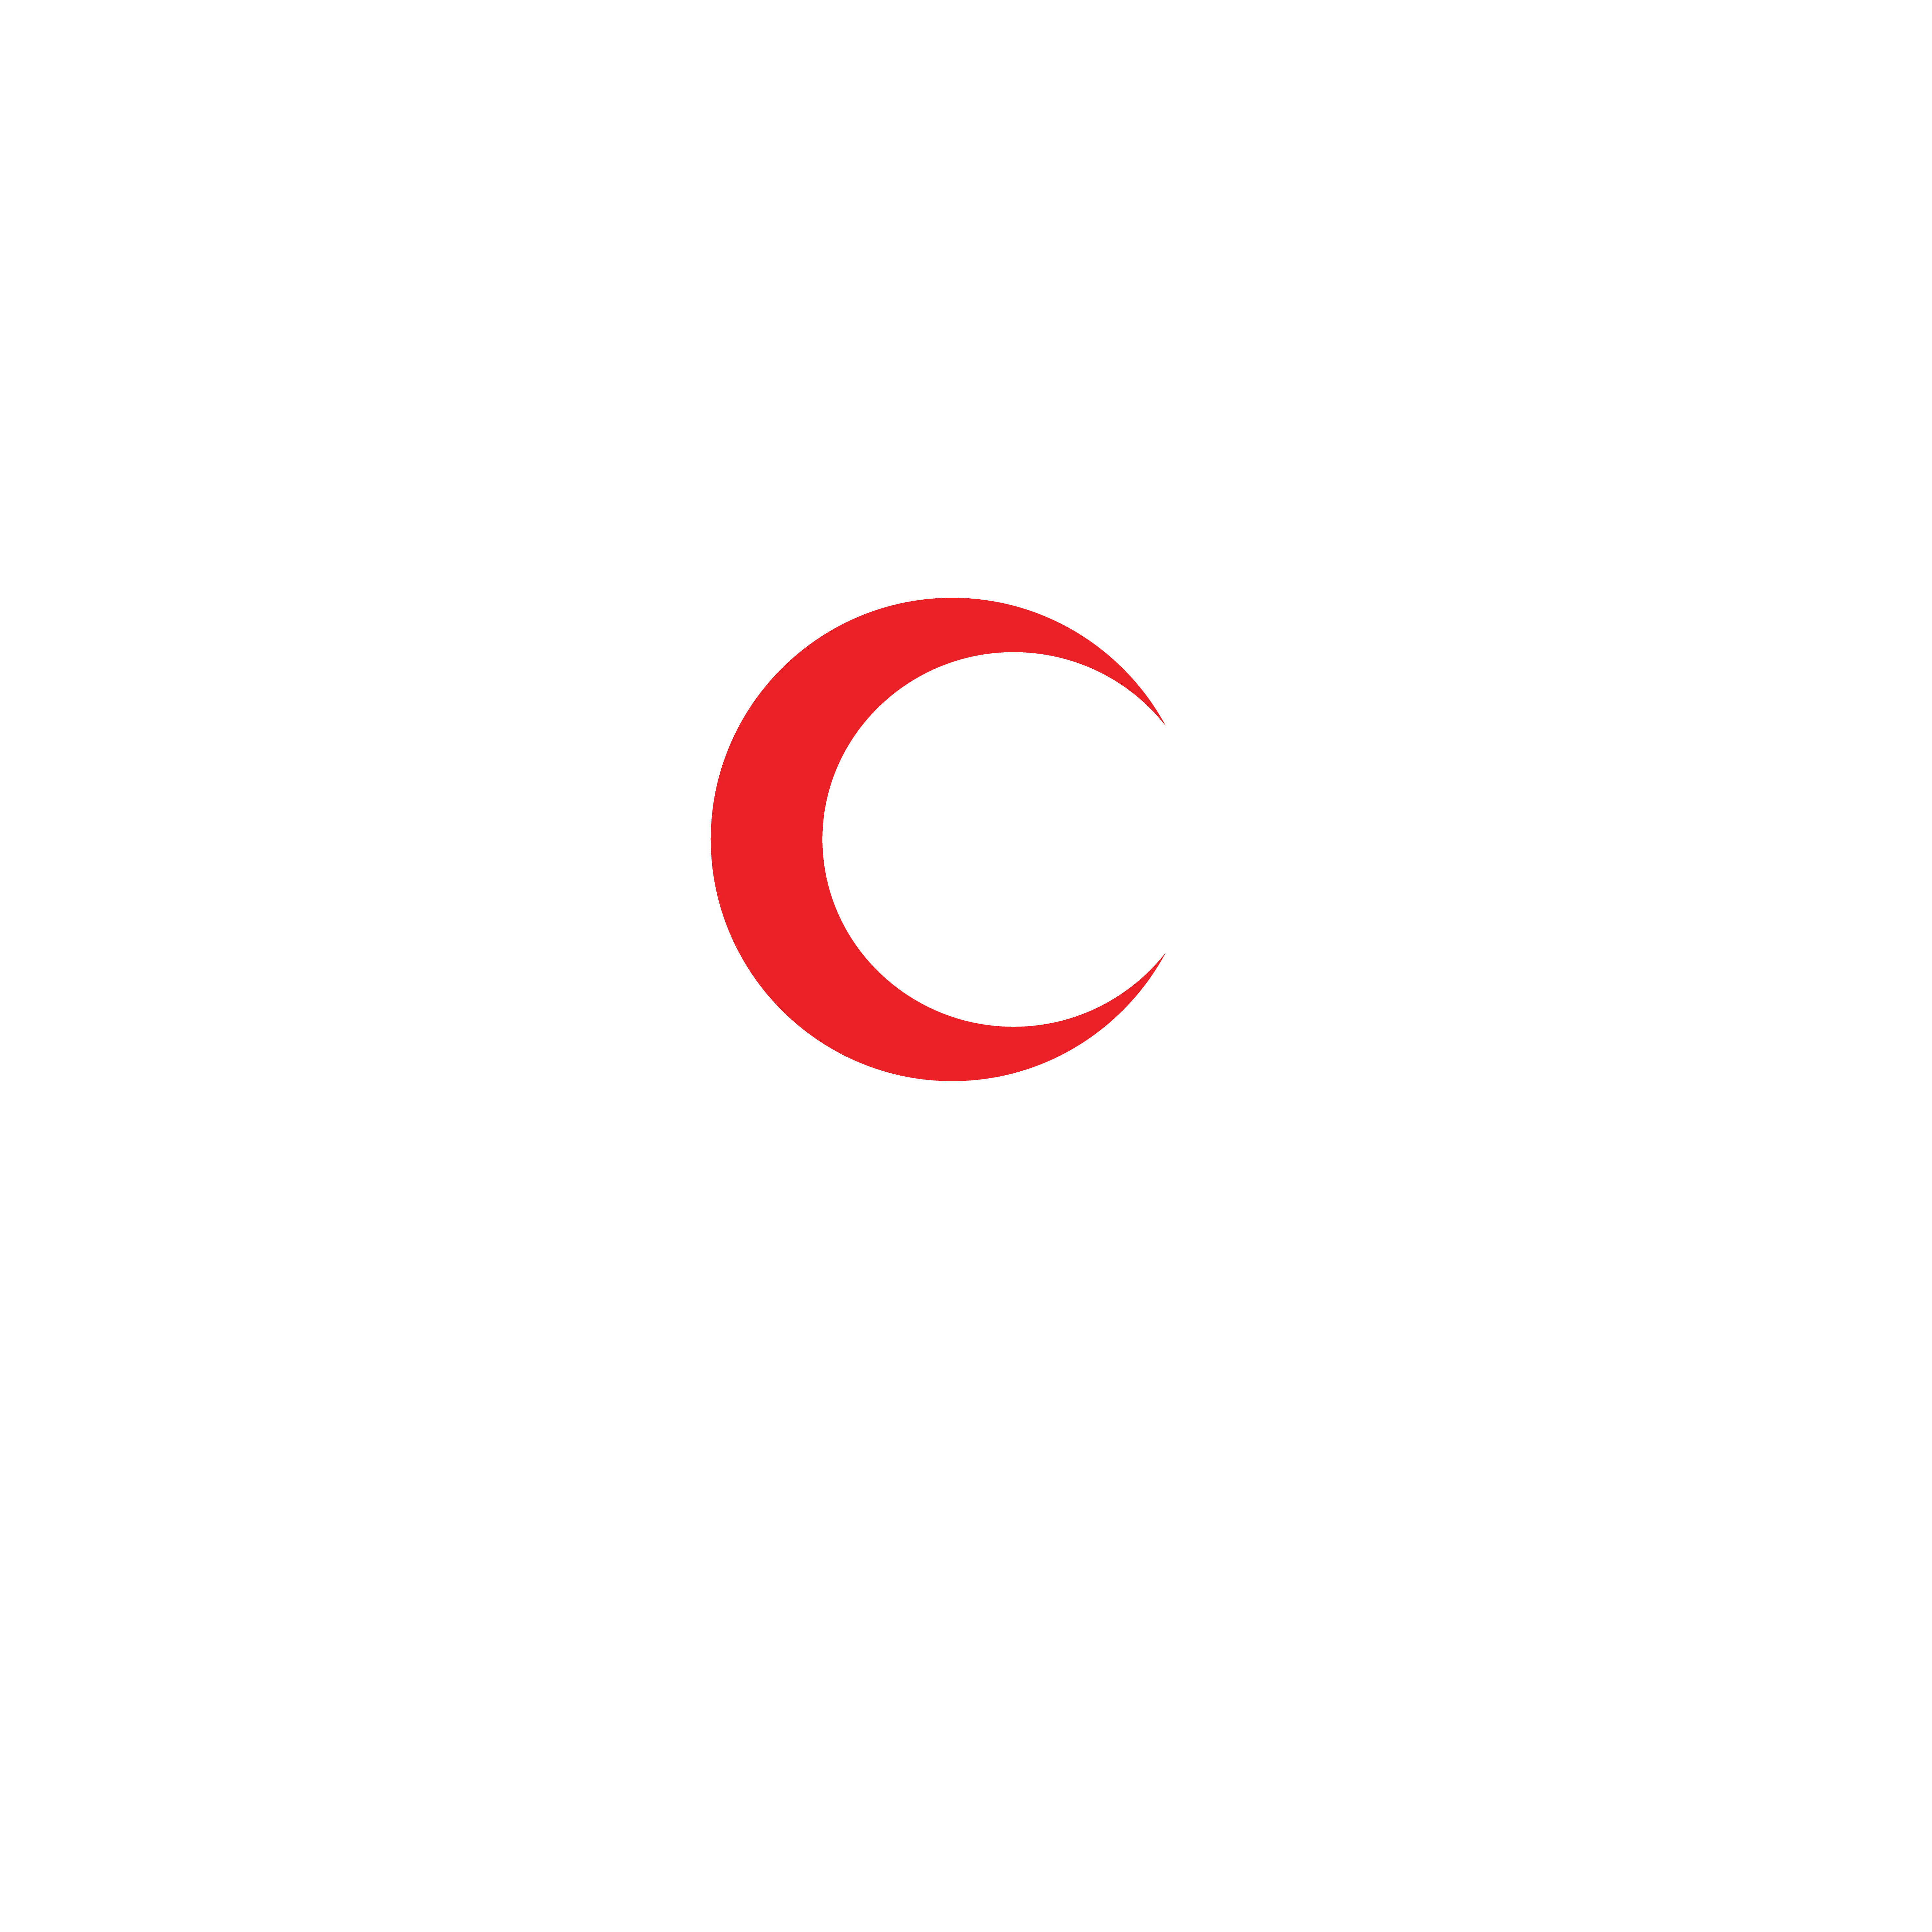 Dar ElAsnan logo